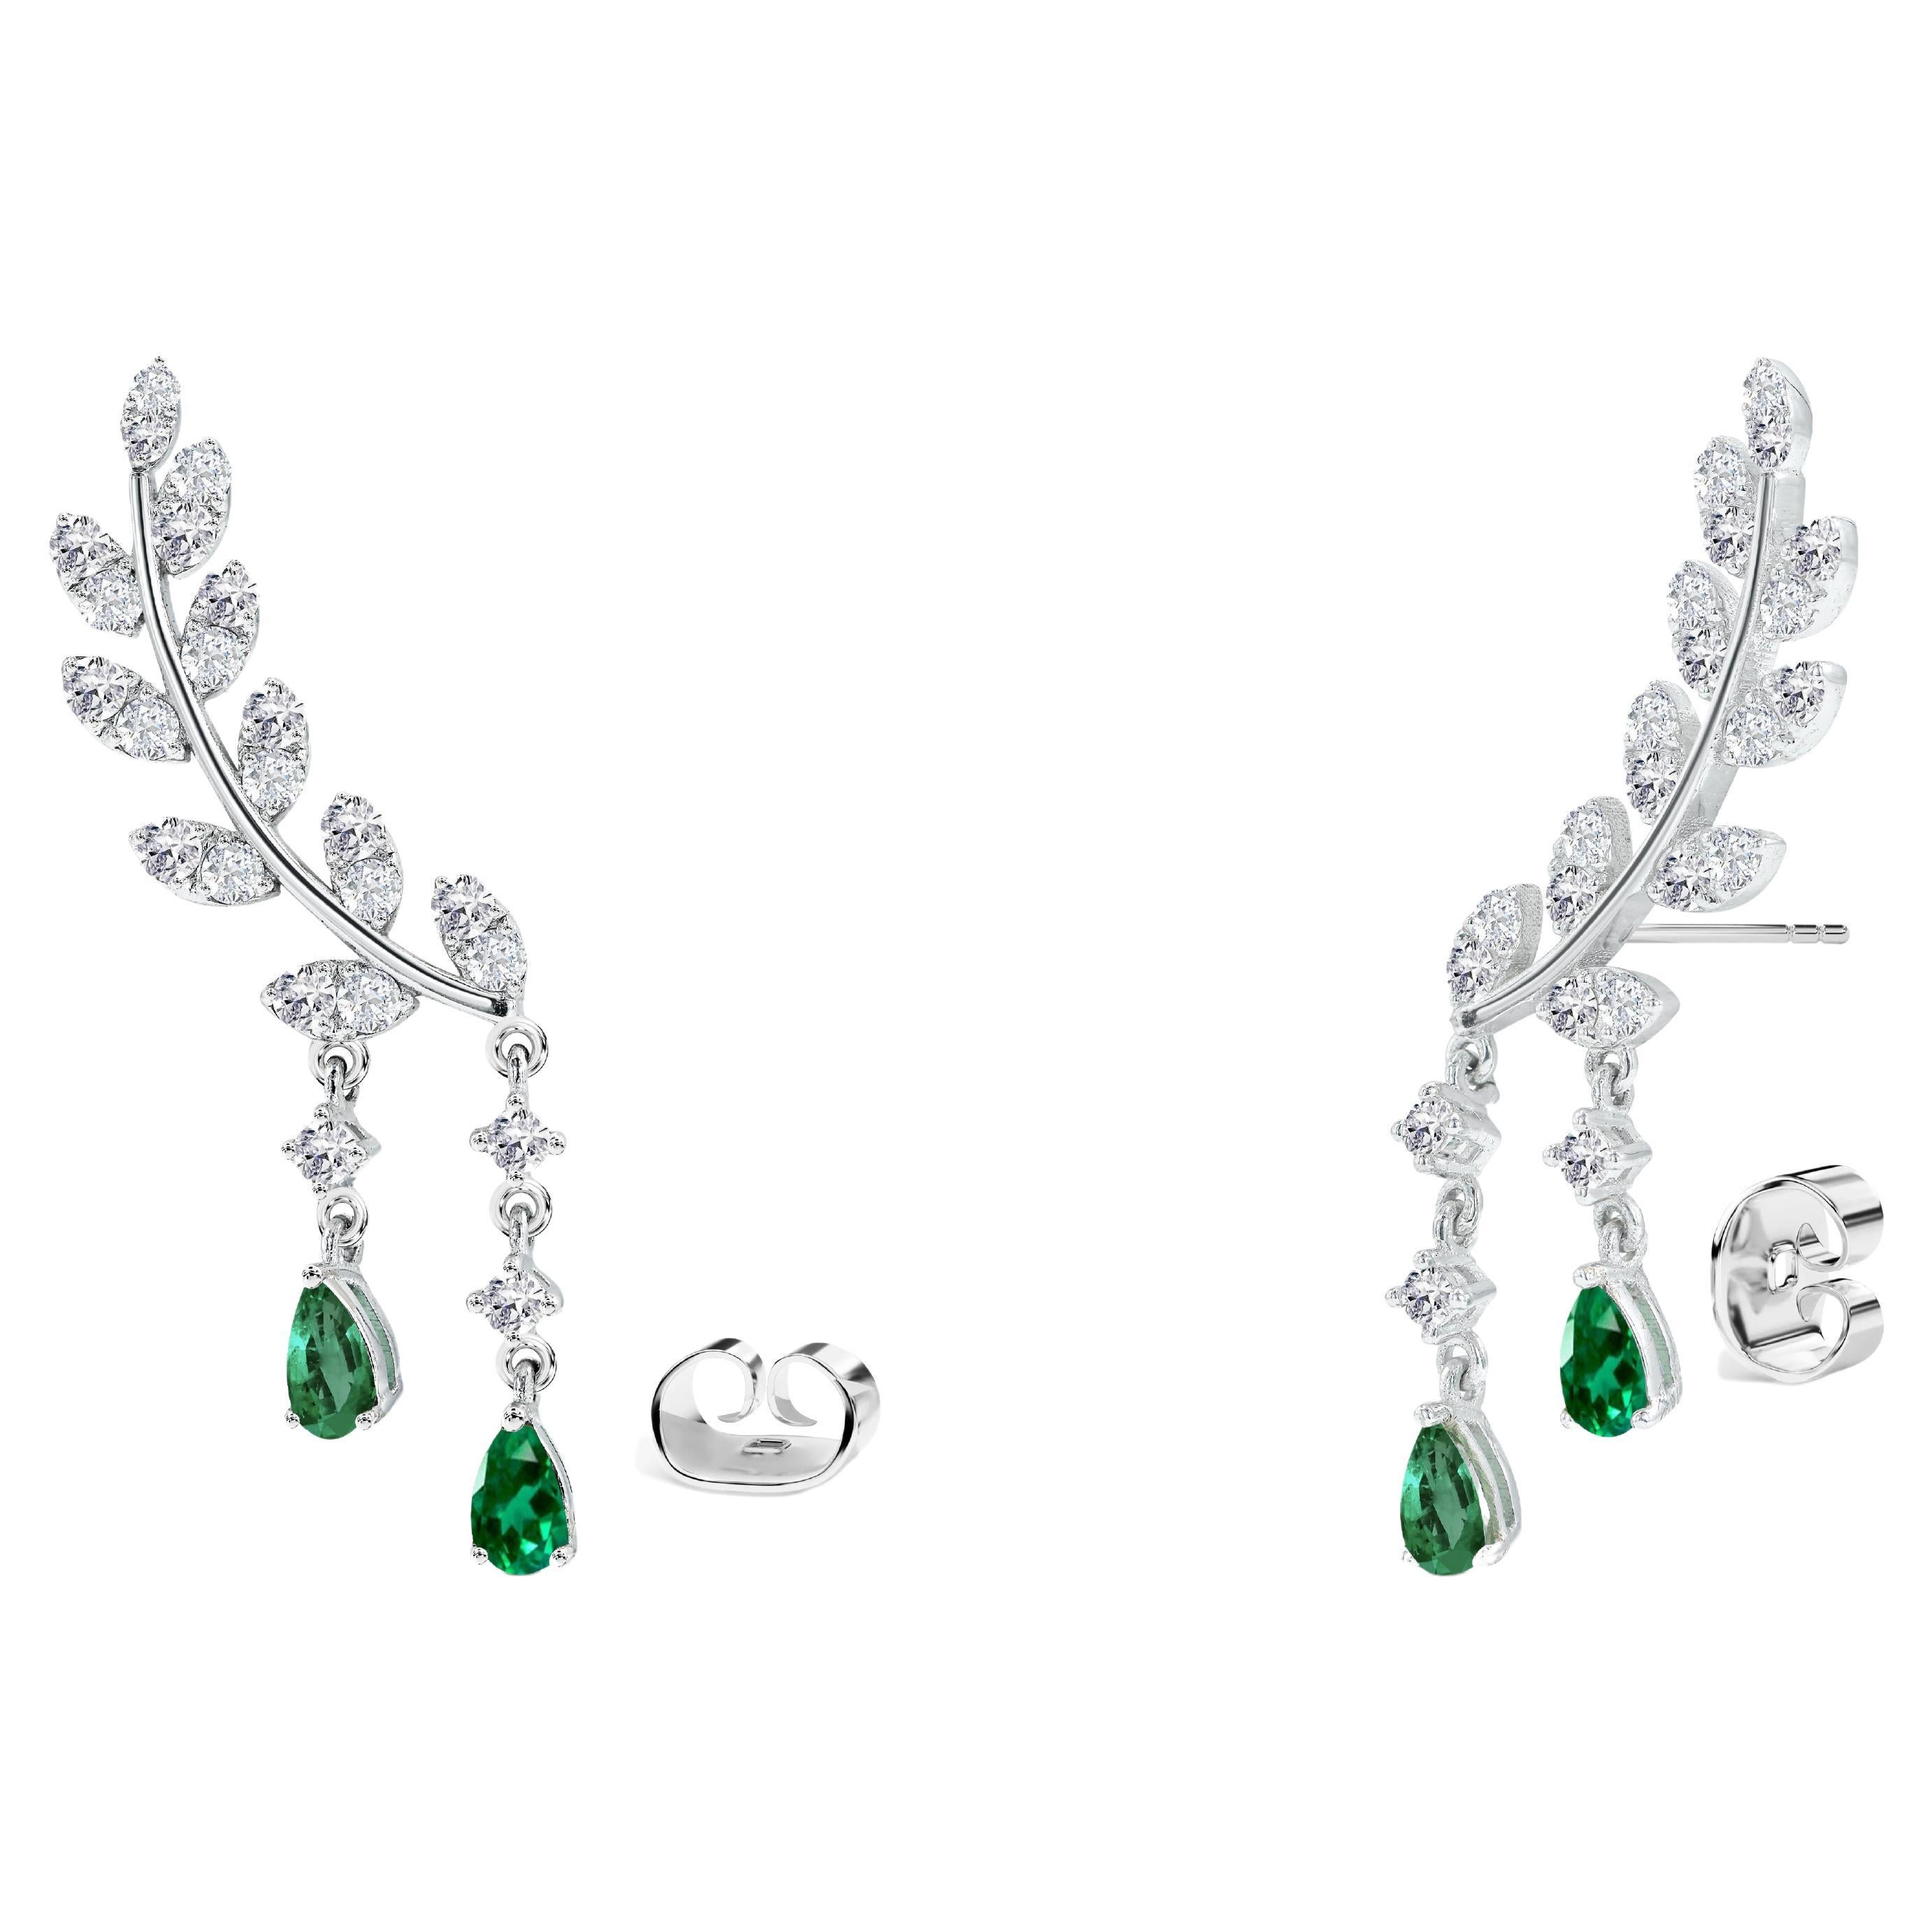 2.25ct Diamond And Emerald Leaf Drop Earrings In 14k Gold Round Cut Diamond